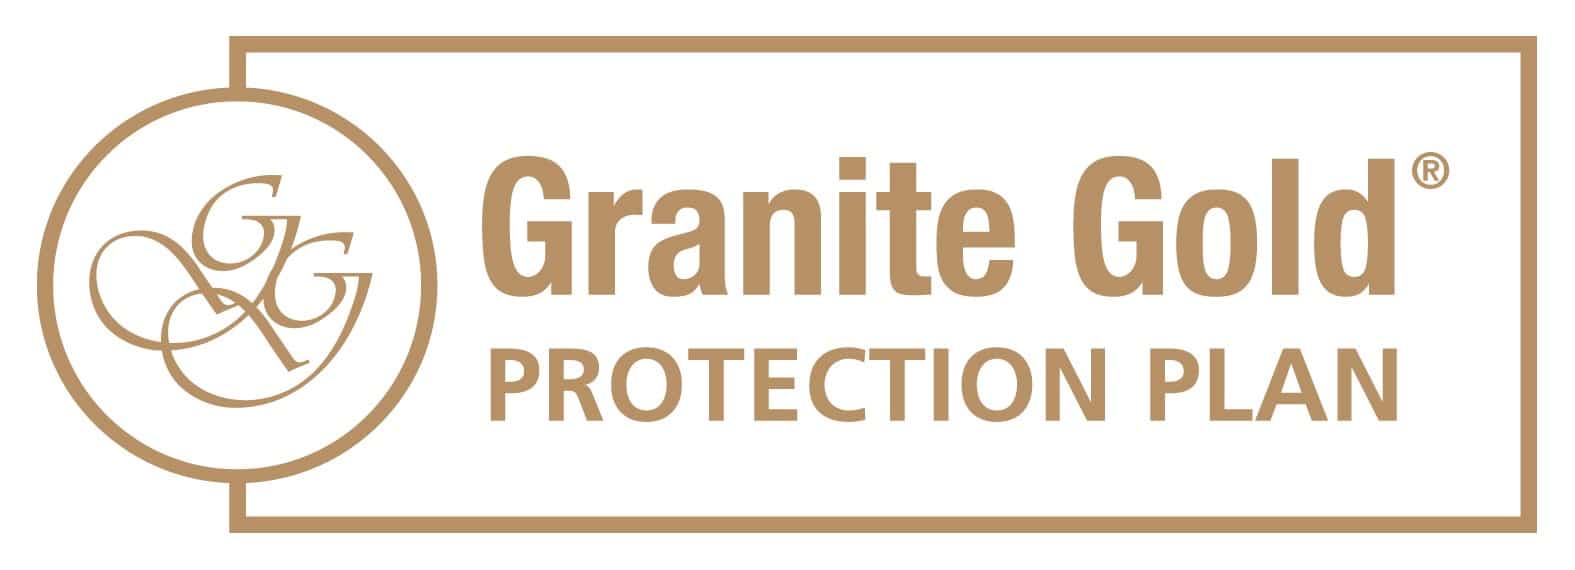 GG ProtectionPlan Logo